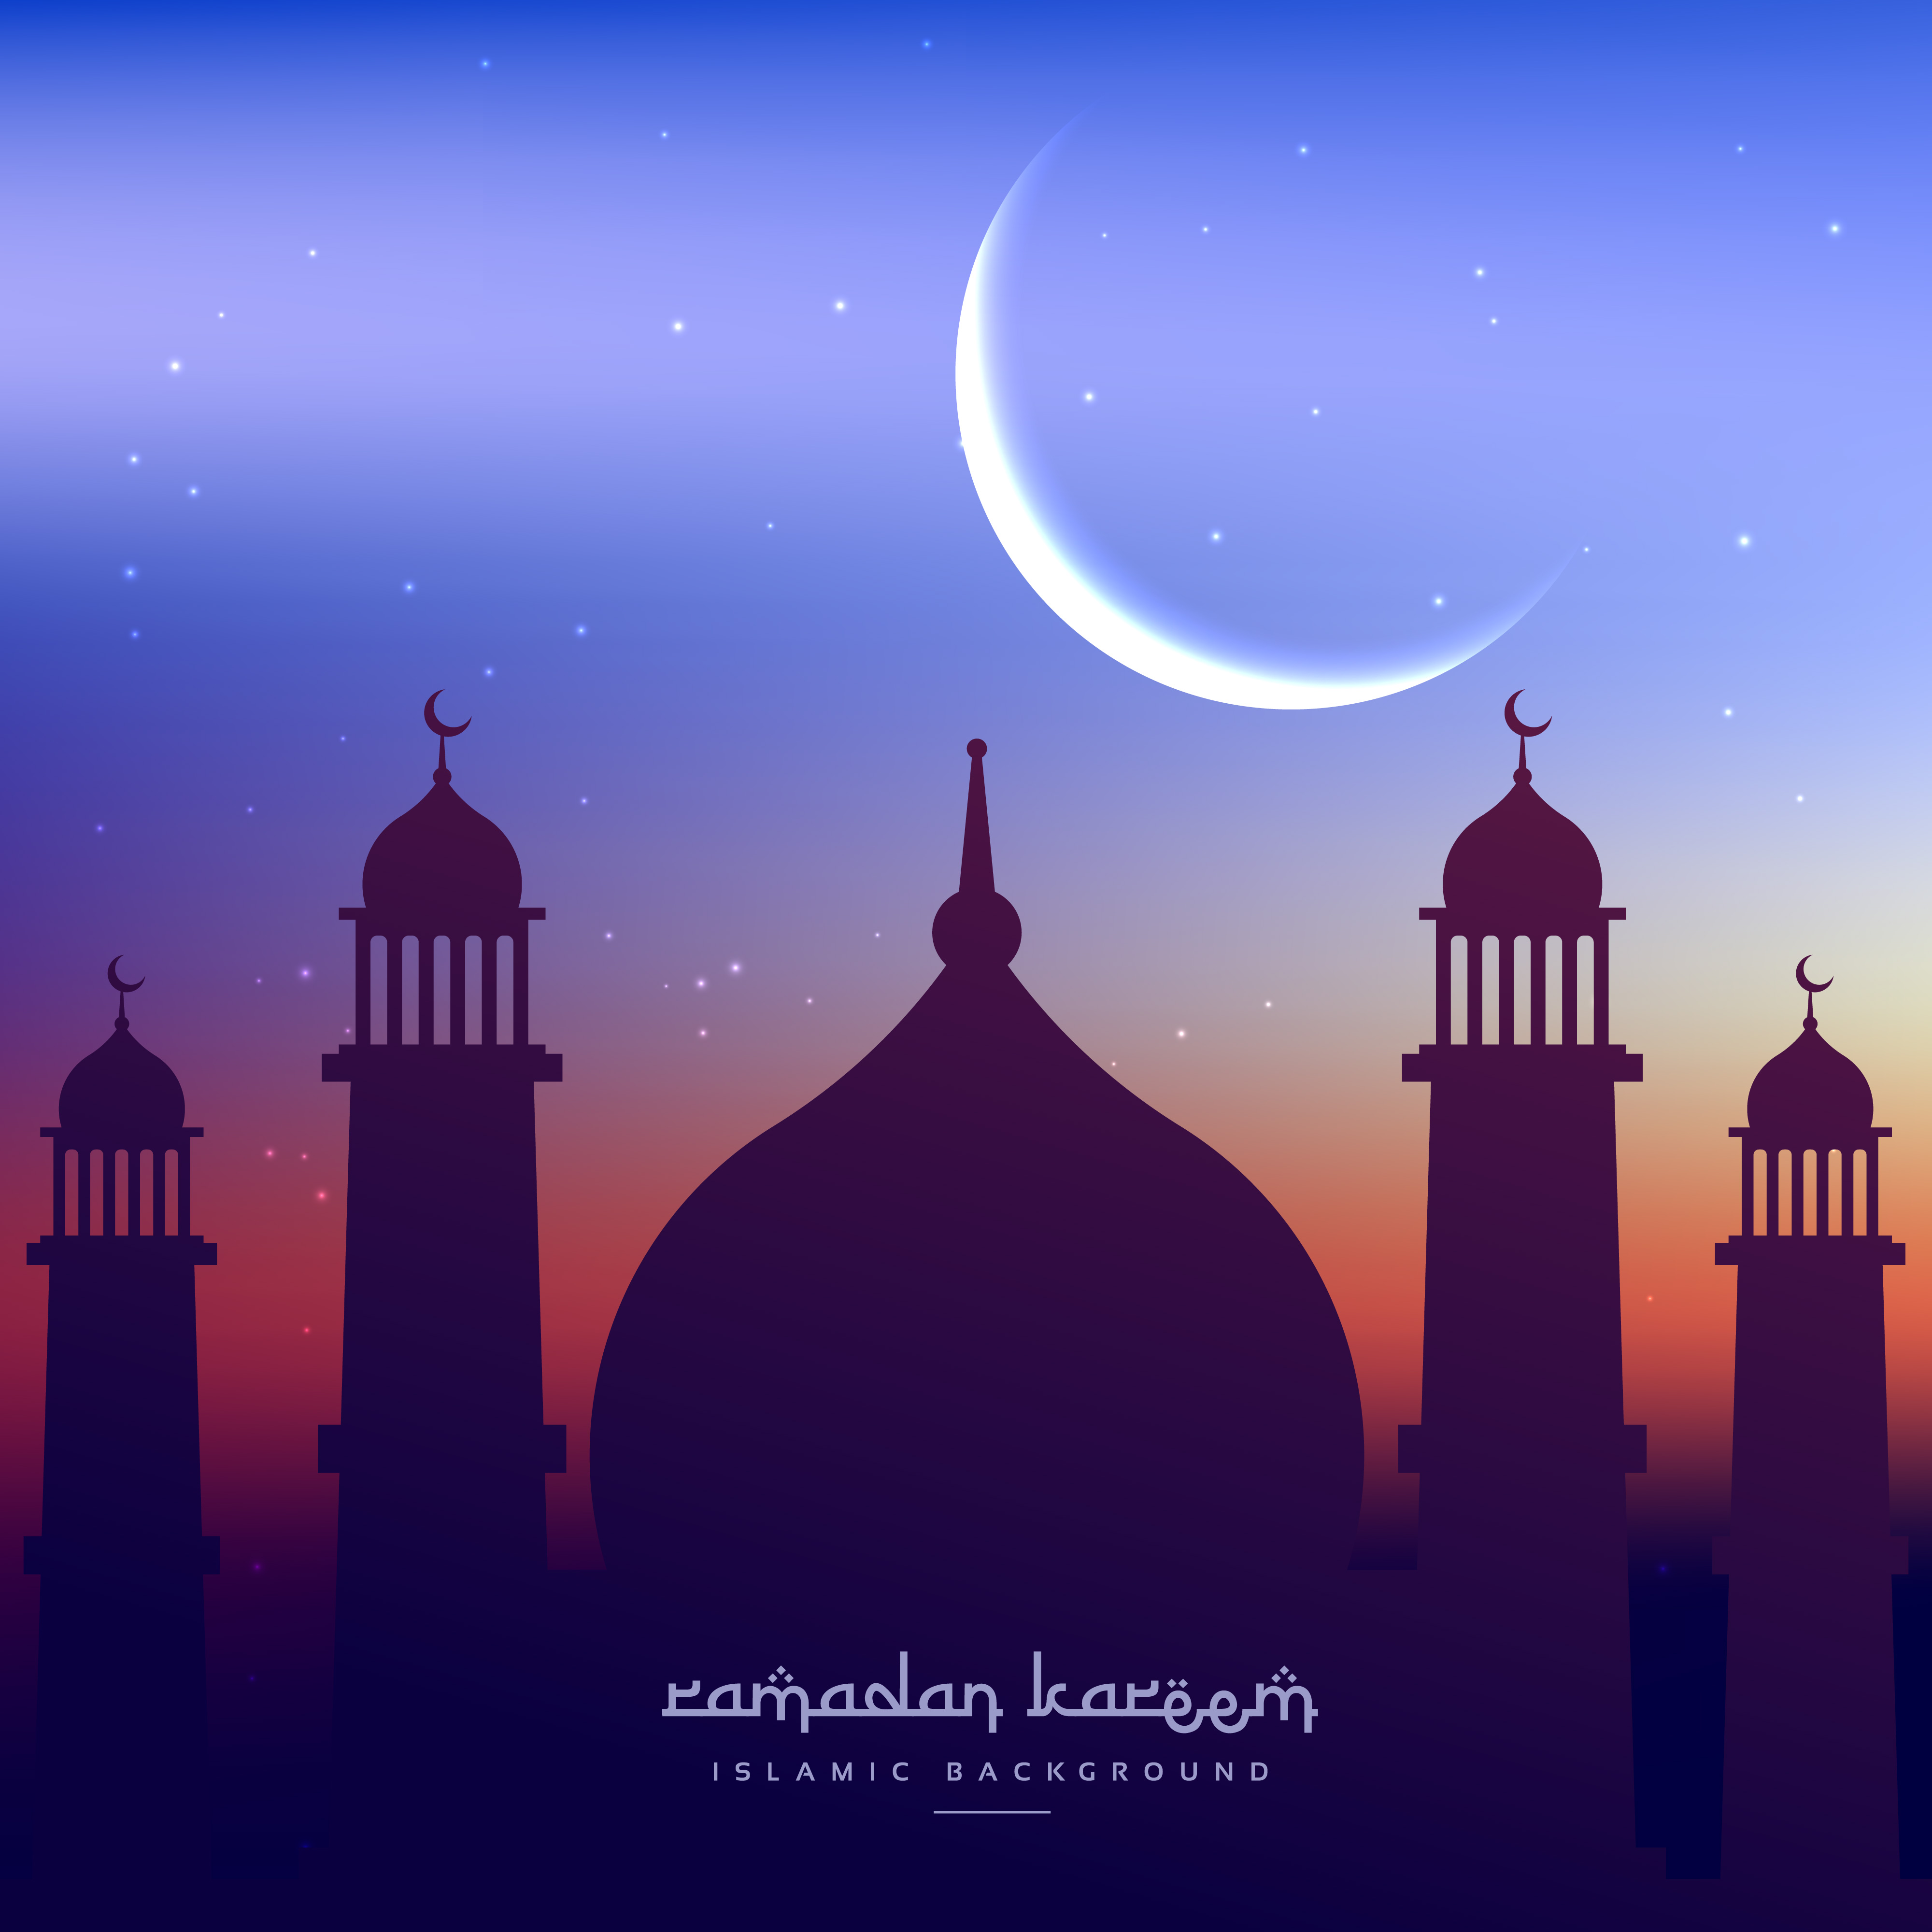 Ramadan kareem background greeting - Download Free Vector 